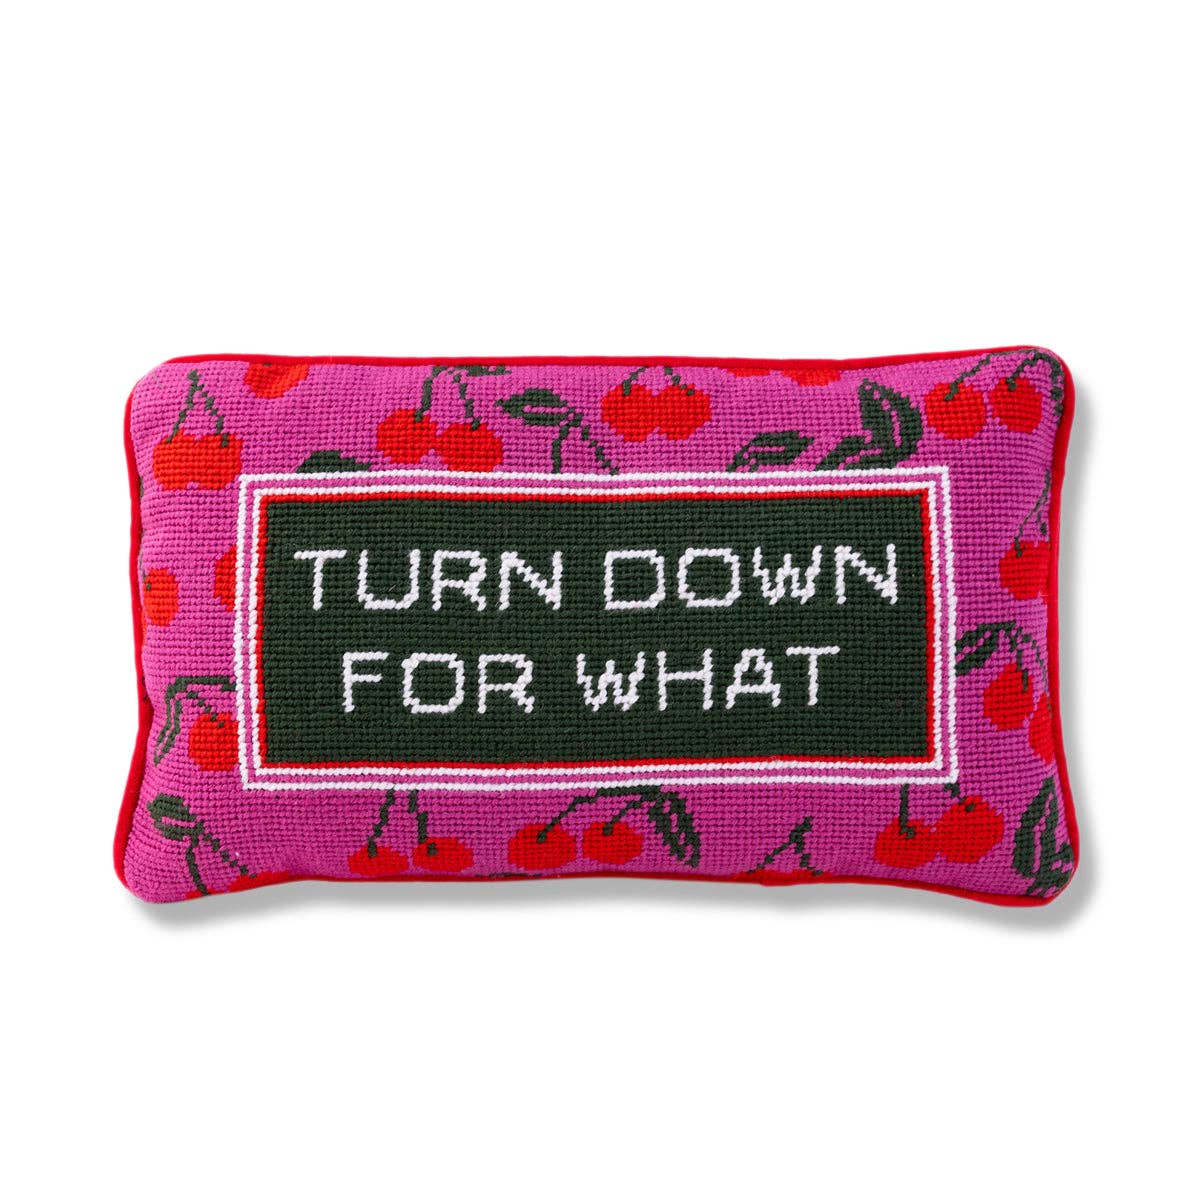 Turn Down Needlepoint Pillow